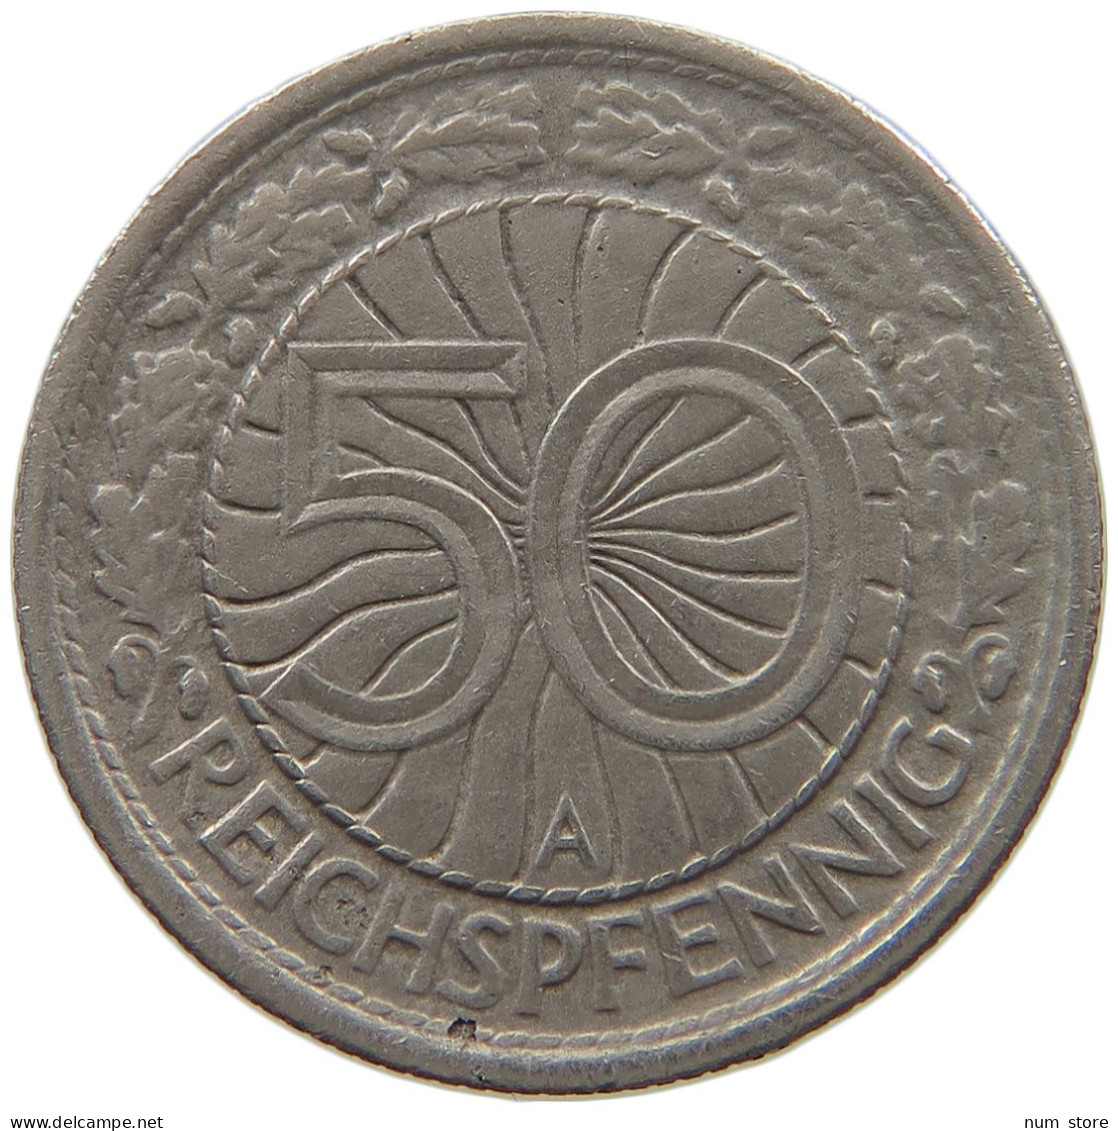 DRITTES REICH 50 PFENNIG 1937 A  #a073 0037 - 5 Reichsmark